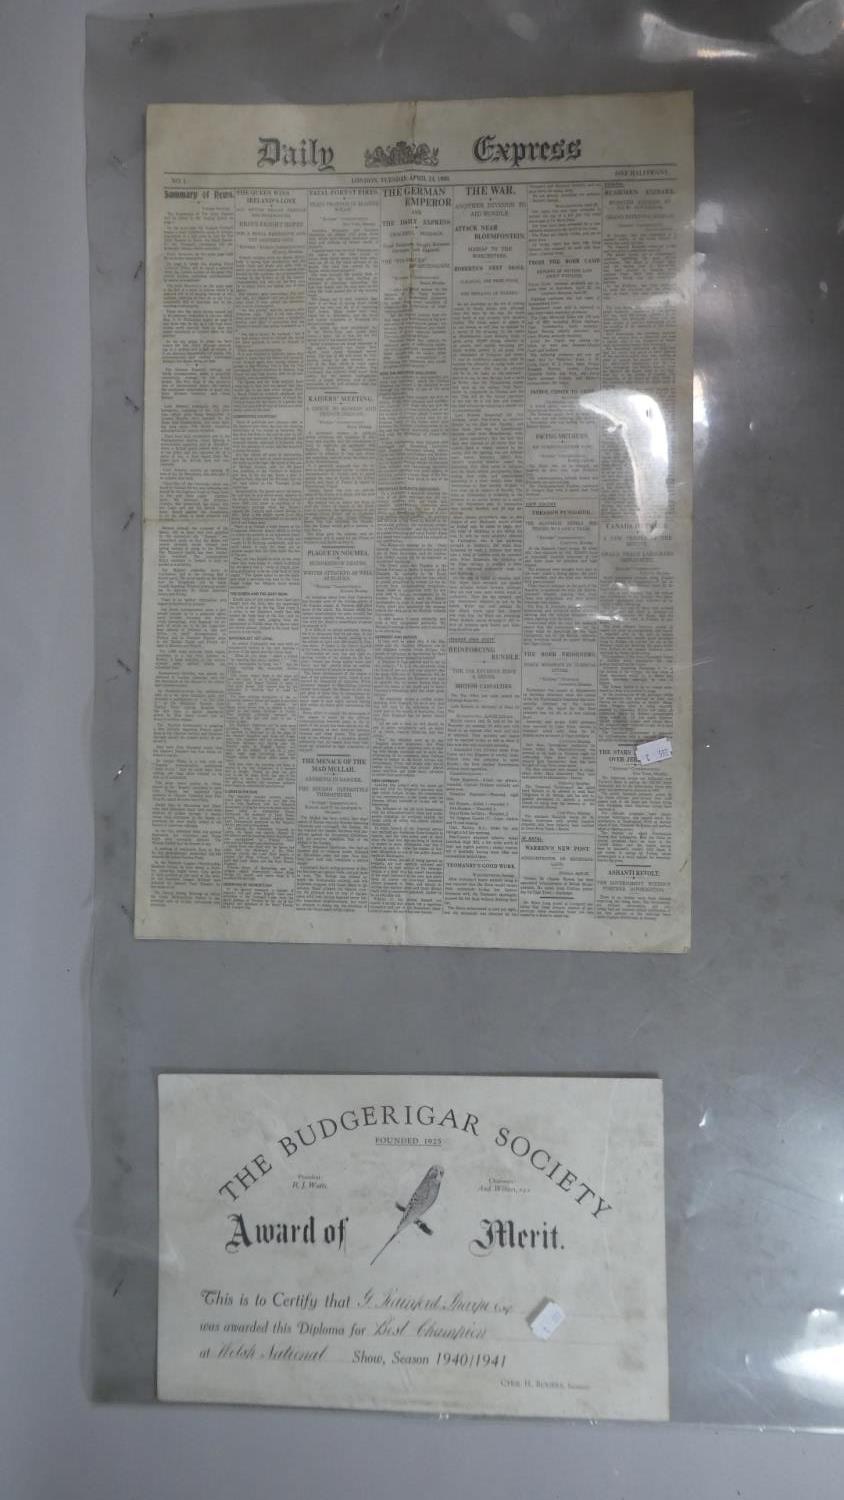 A Copy of Daily Express April 1900 and a 1940/41 Budgerigar Award of Merit